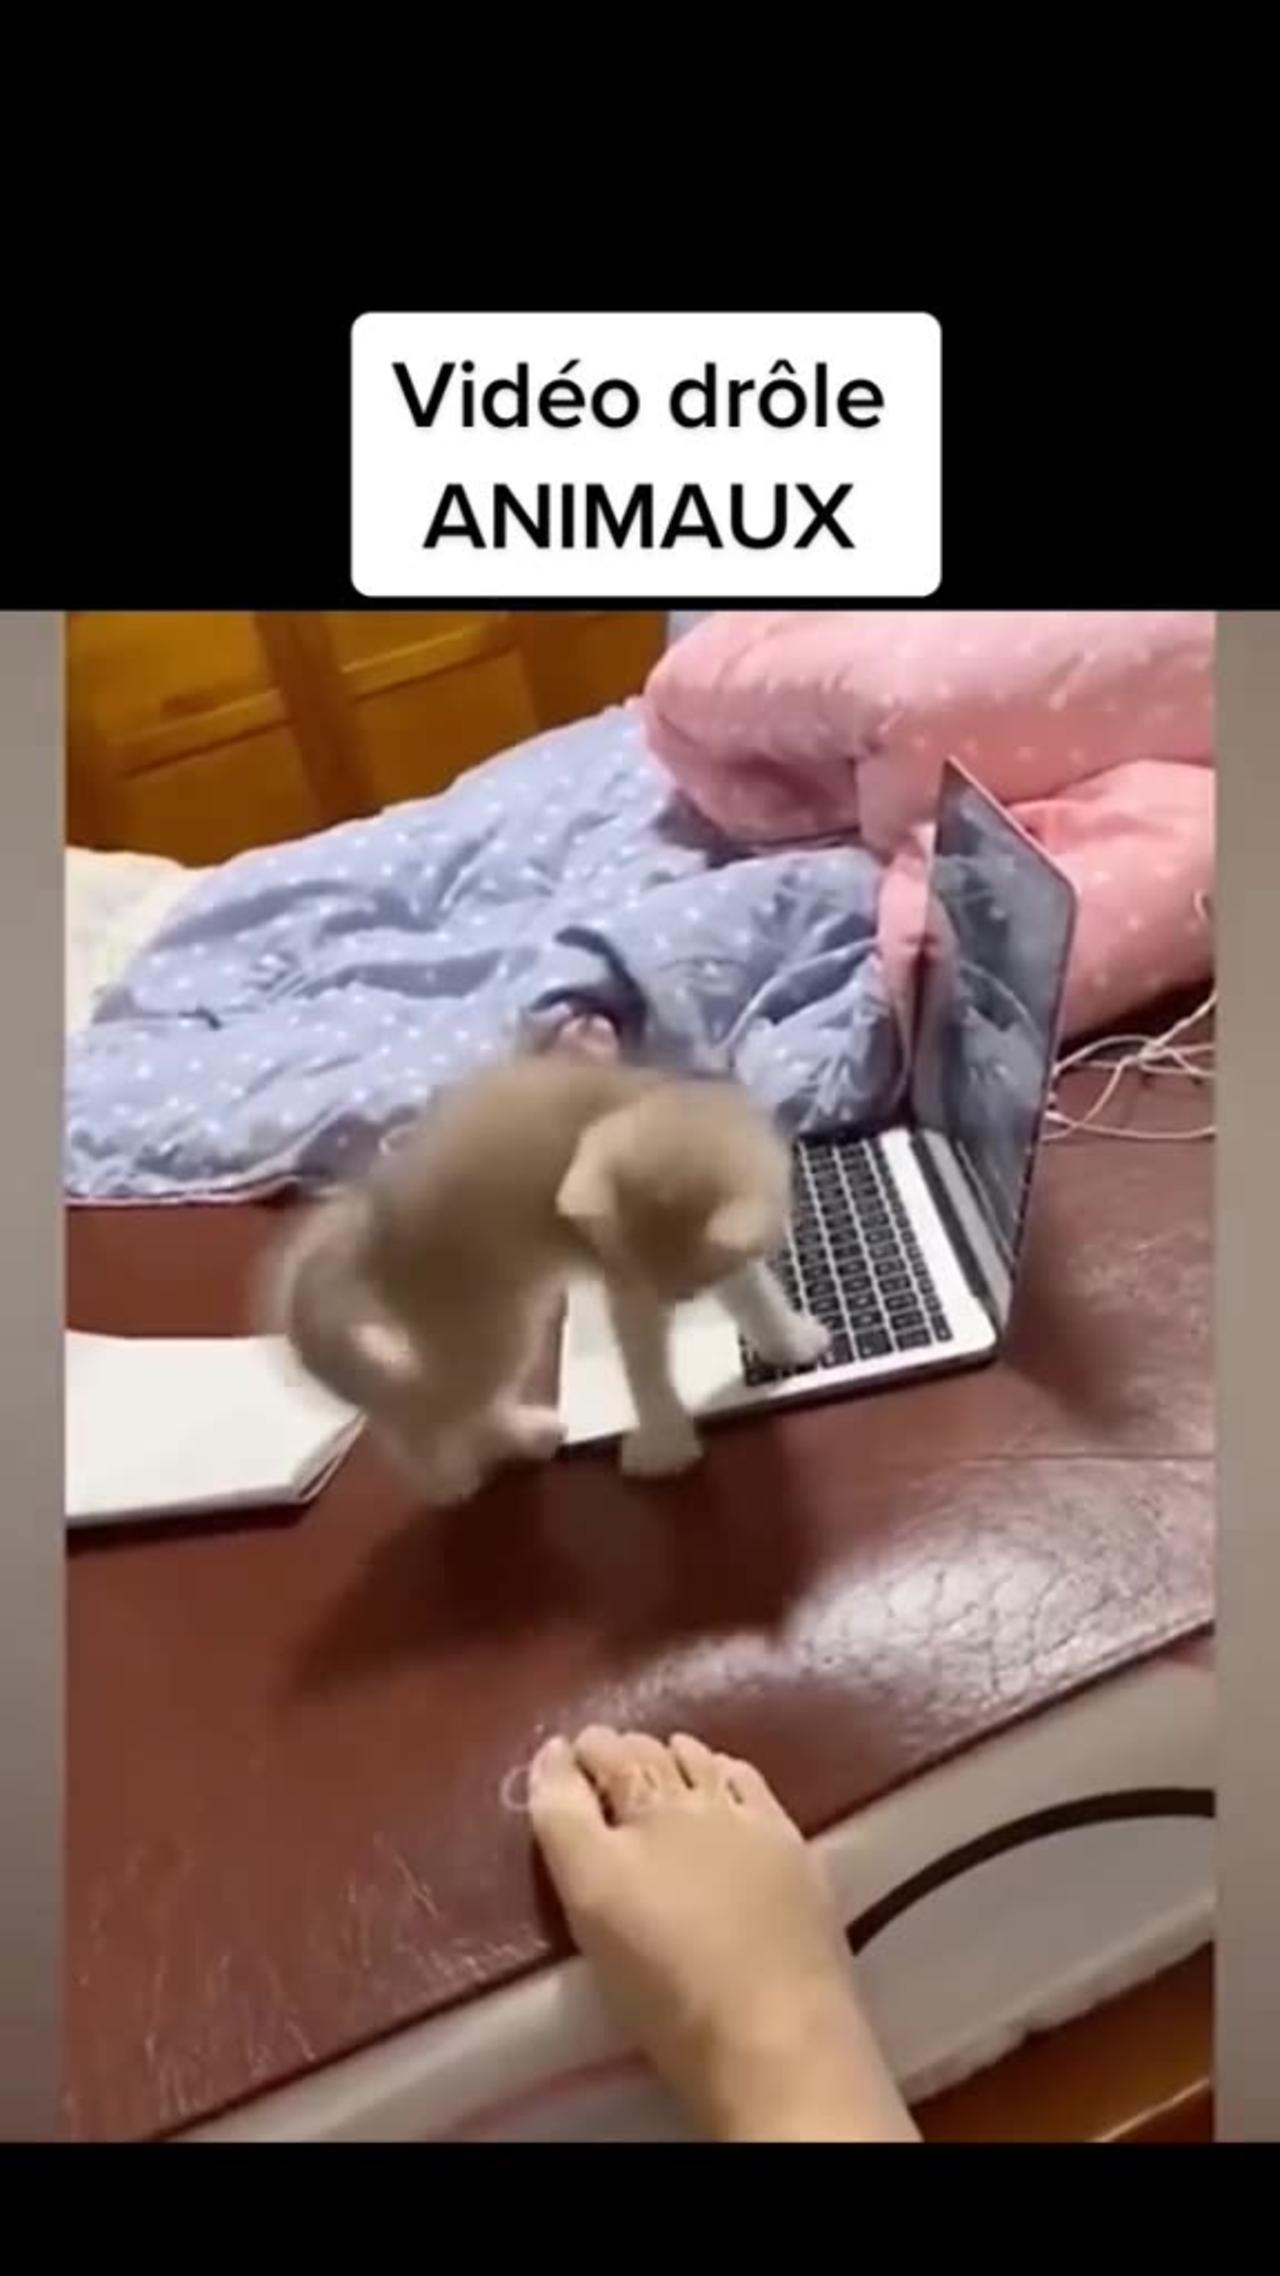 Funny vidéos animals